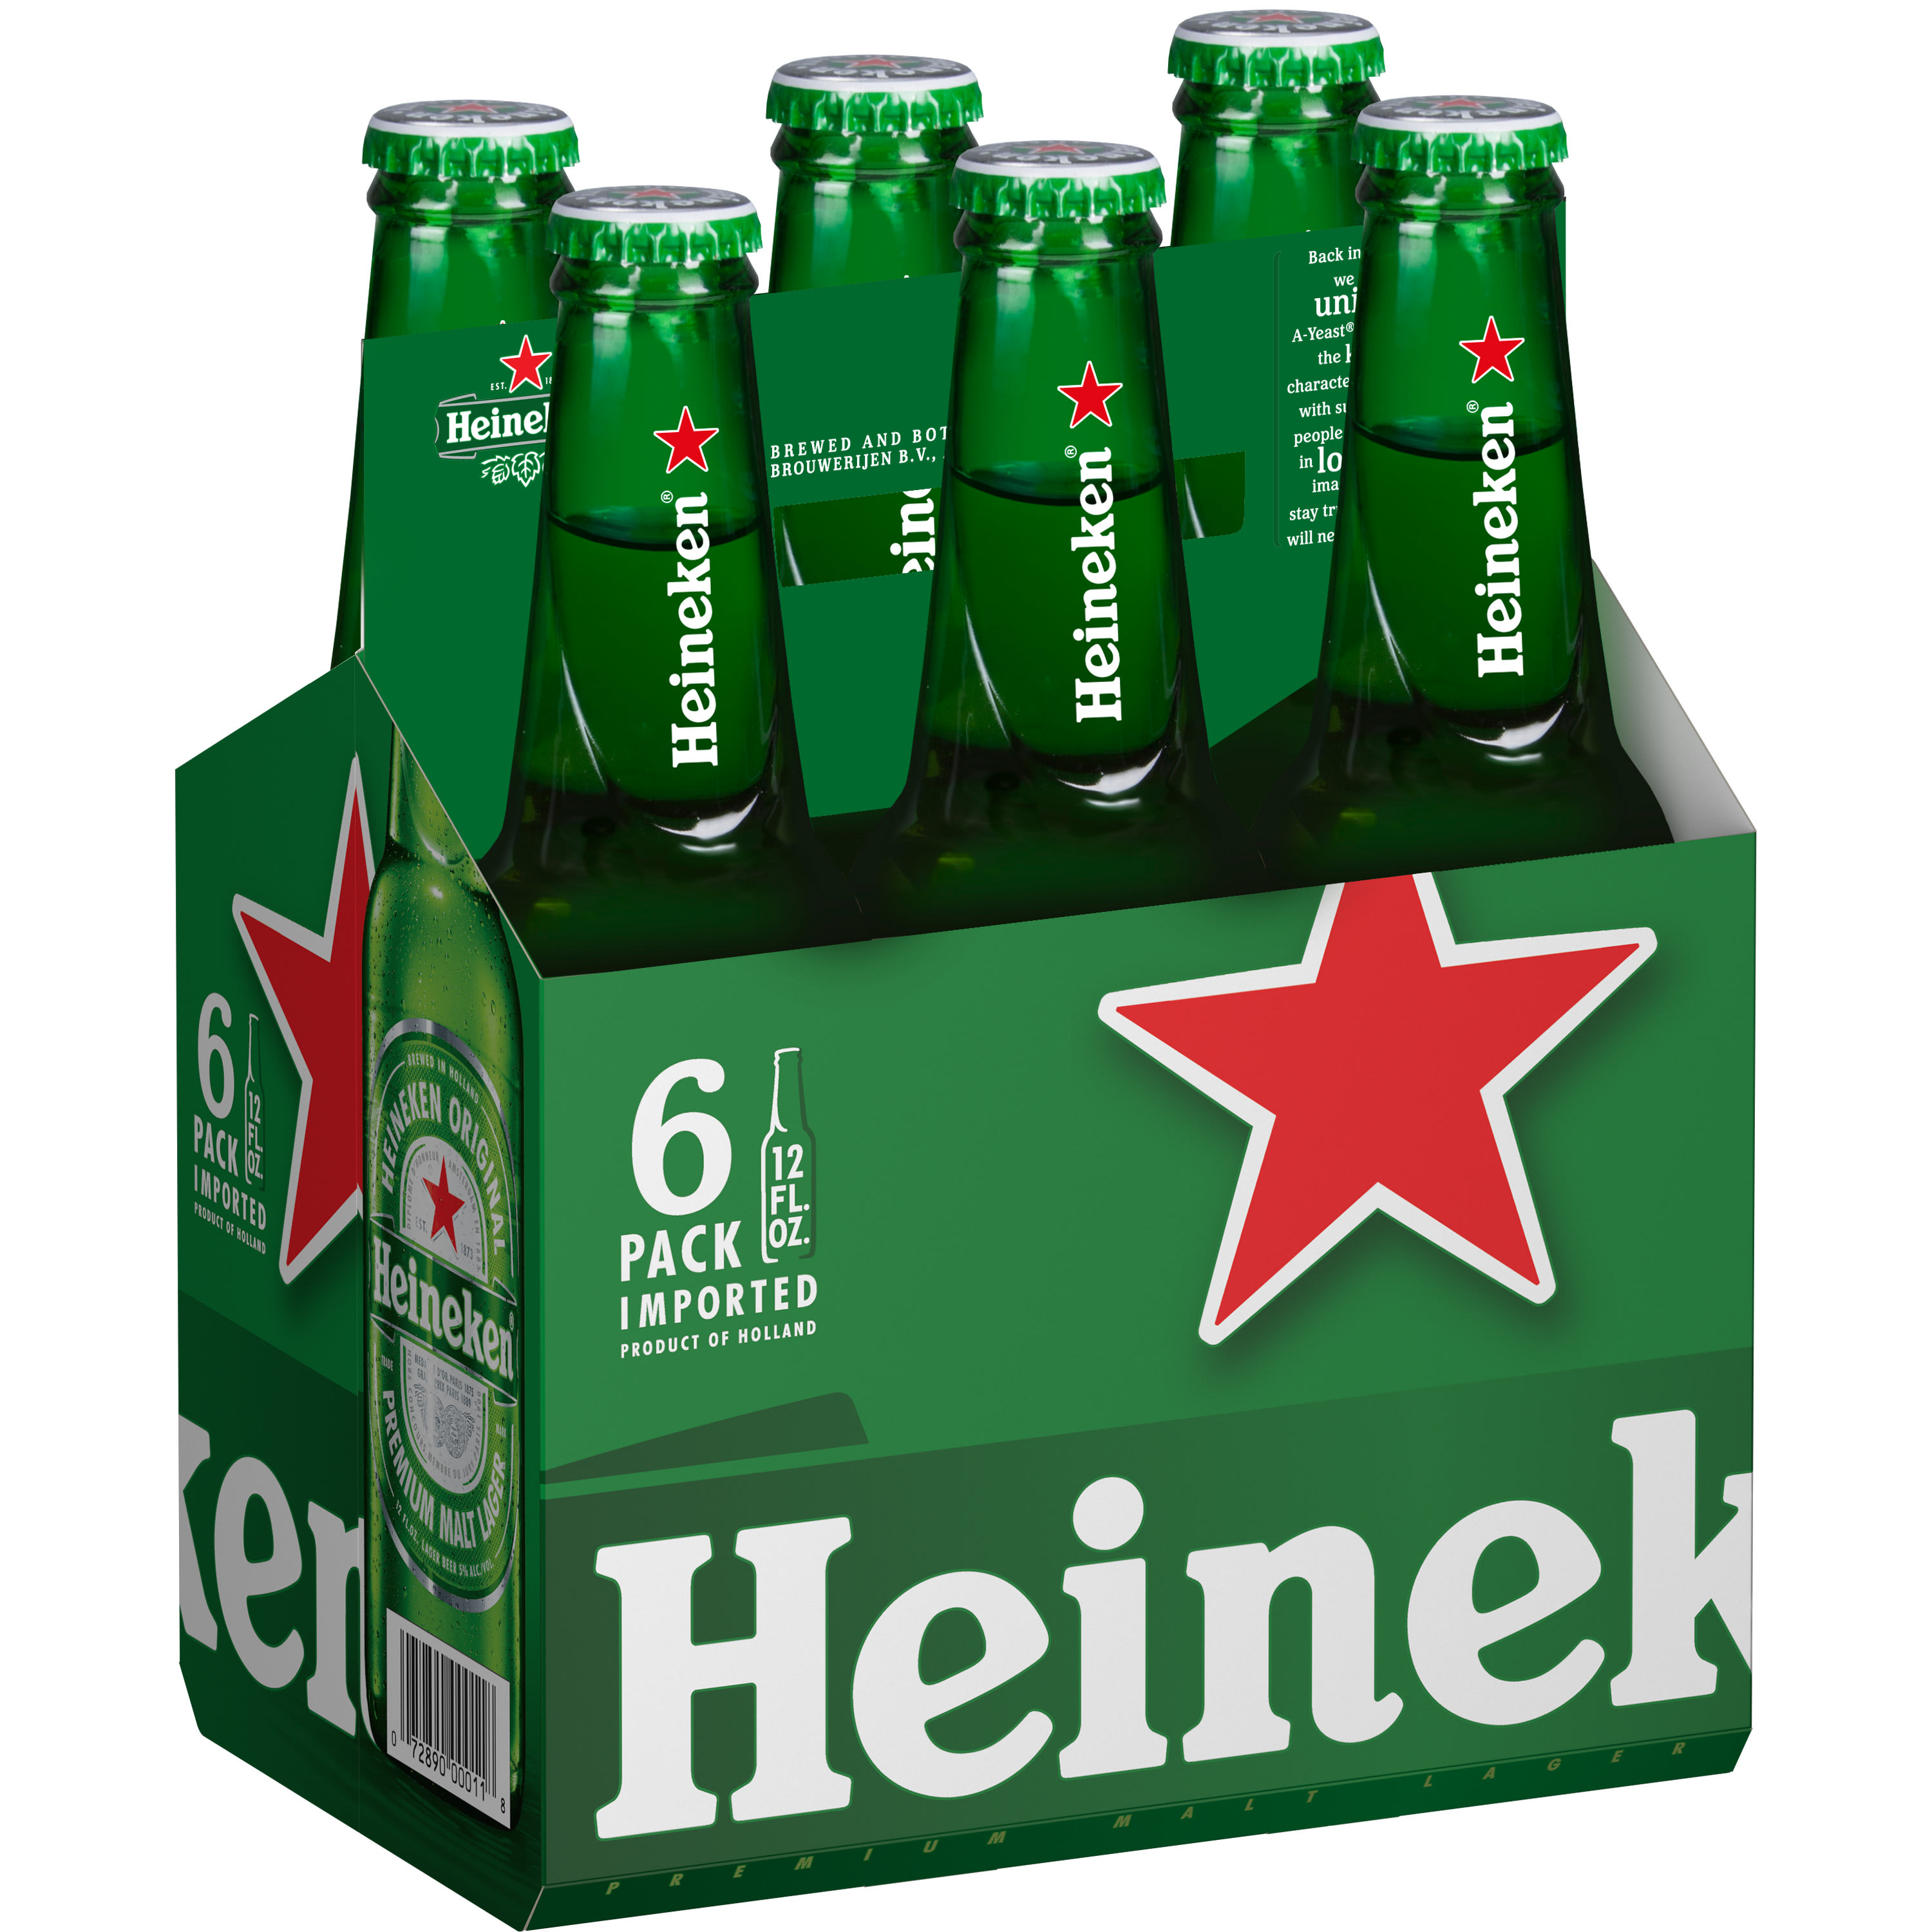 heineken-12oz-6-pk-bottles-delivery-in-gilbert-az-git-n-run